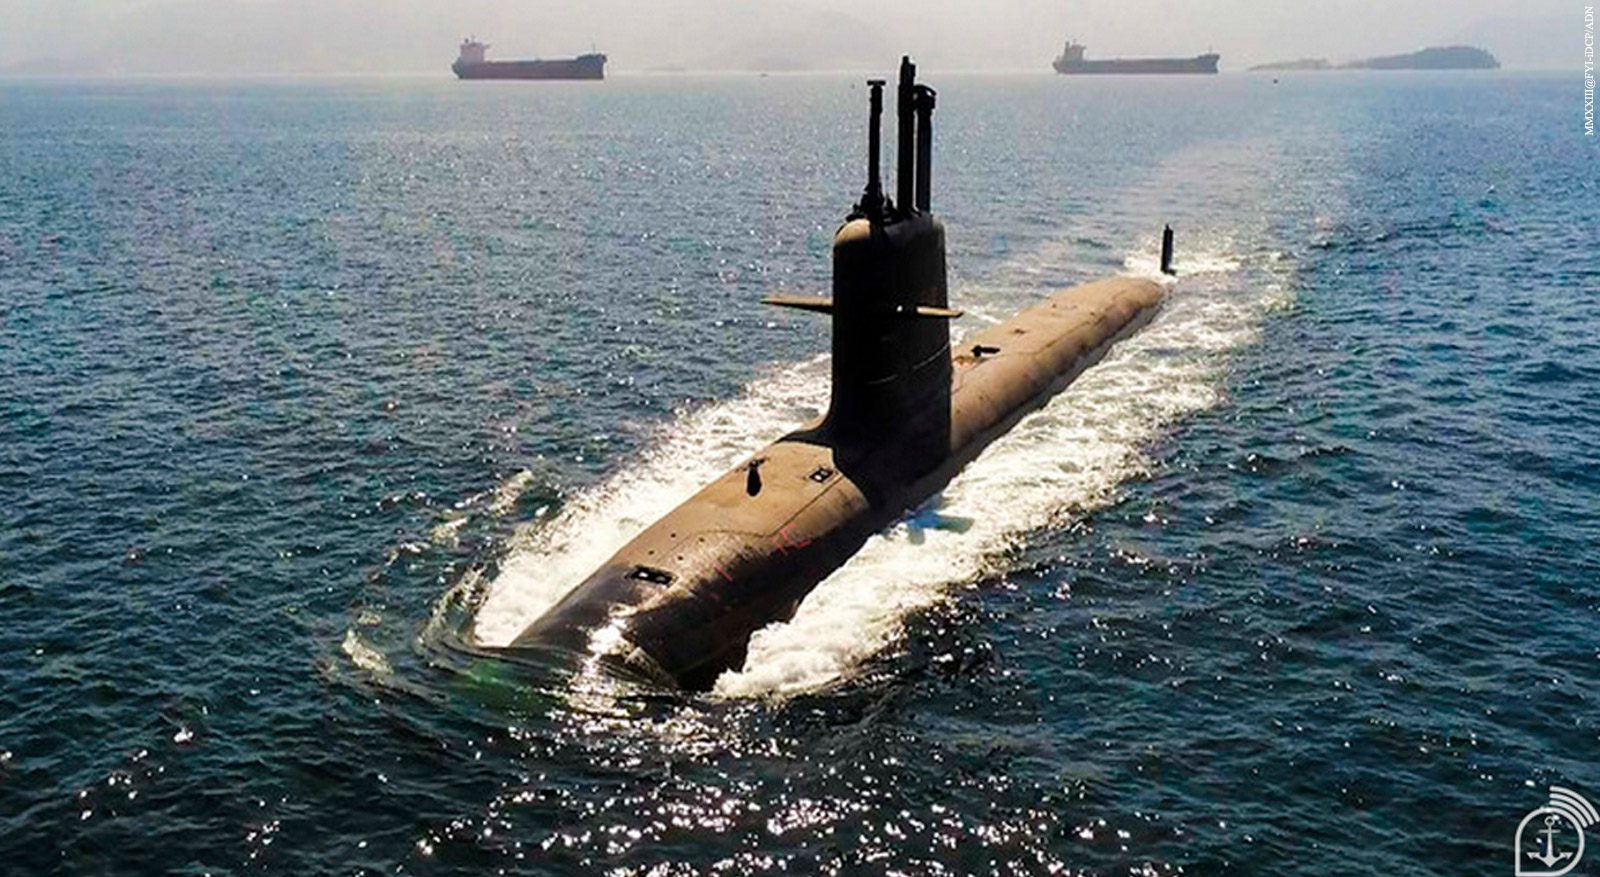 Brazilian Navy's Submarine Development Program turns 15